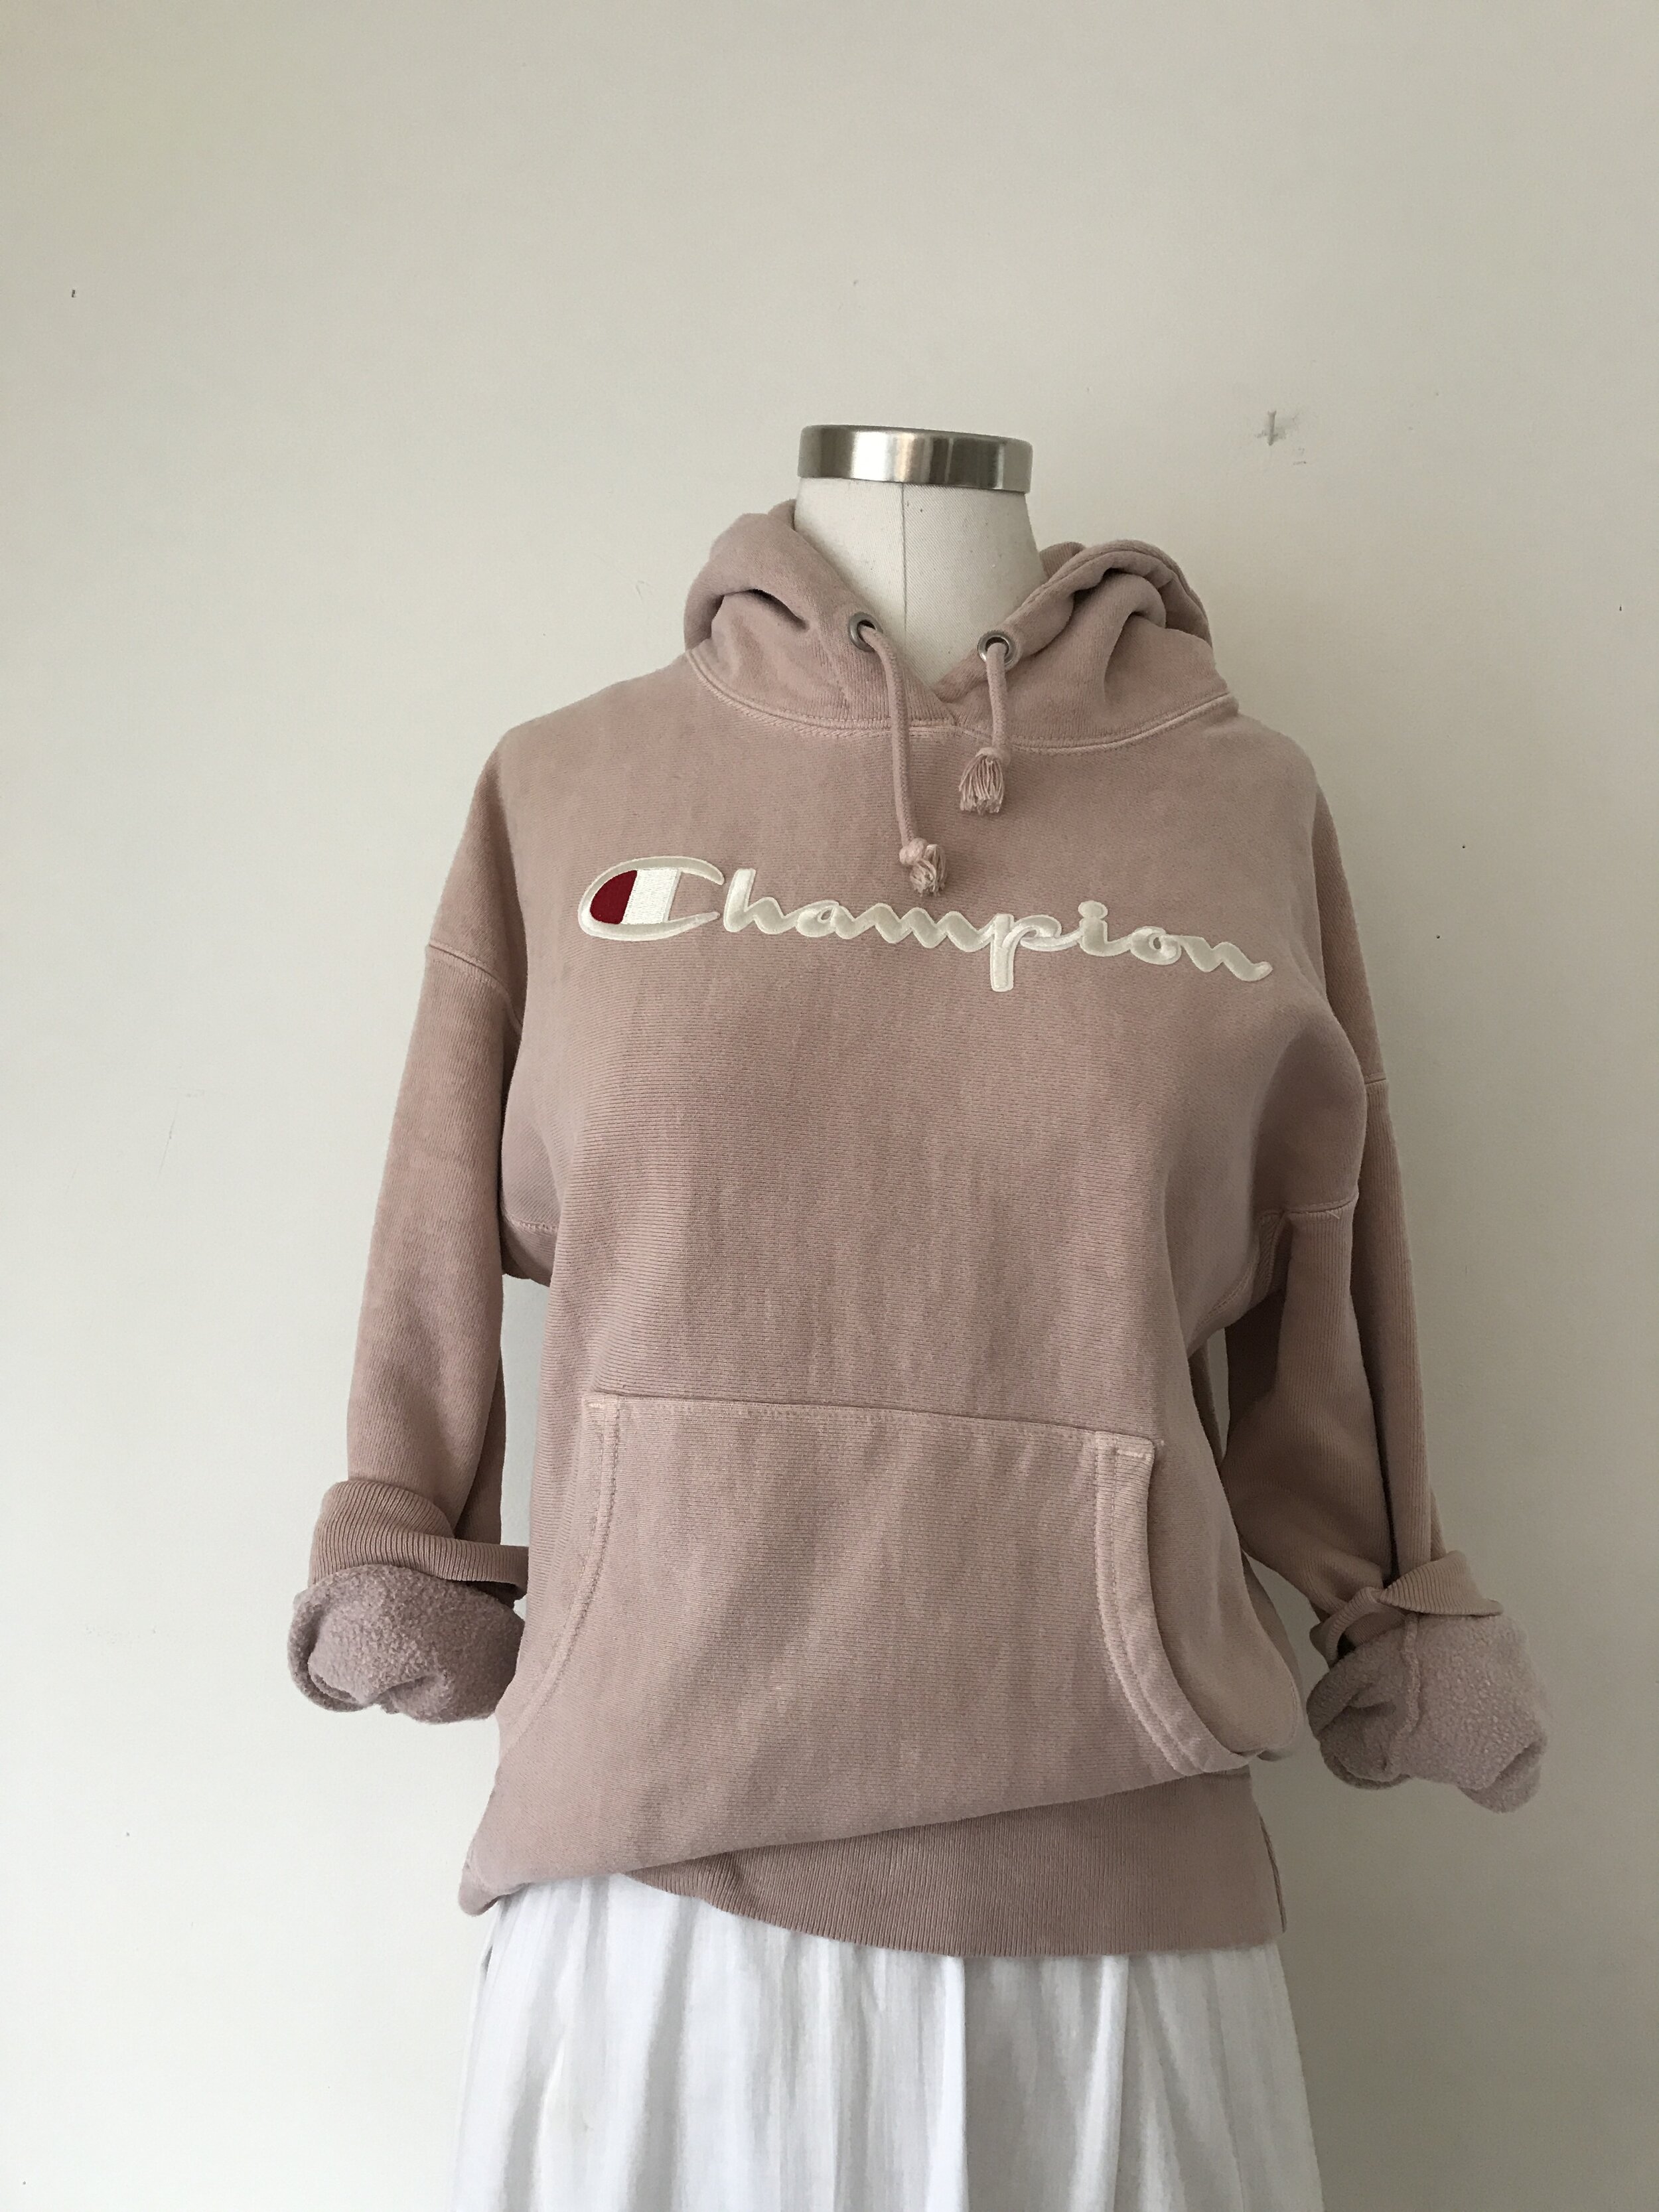 blush champion hoodie